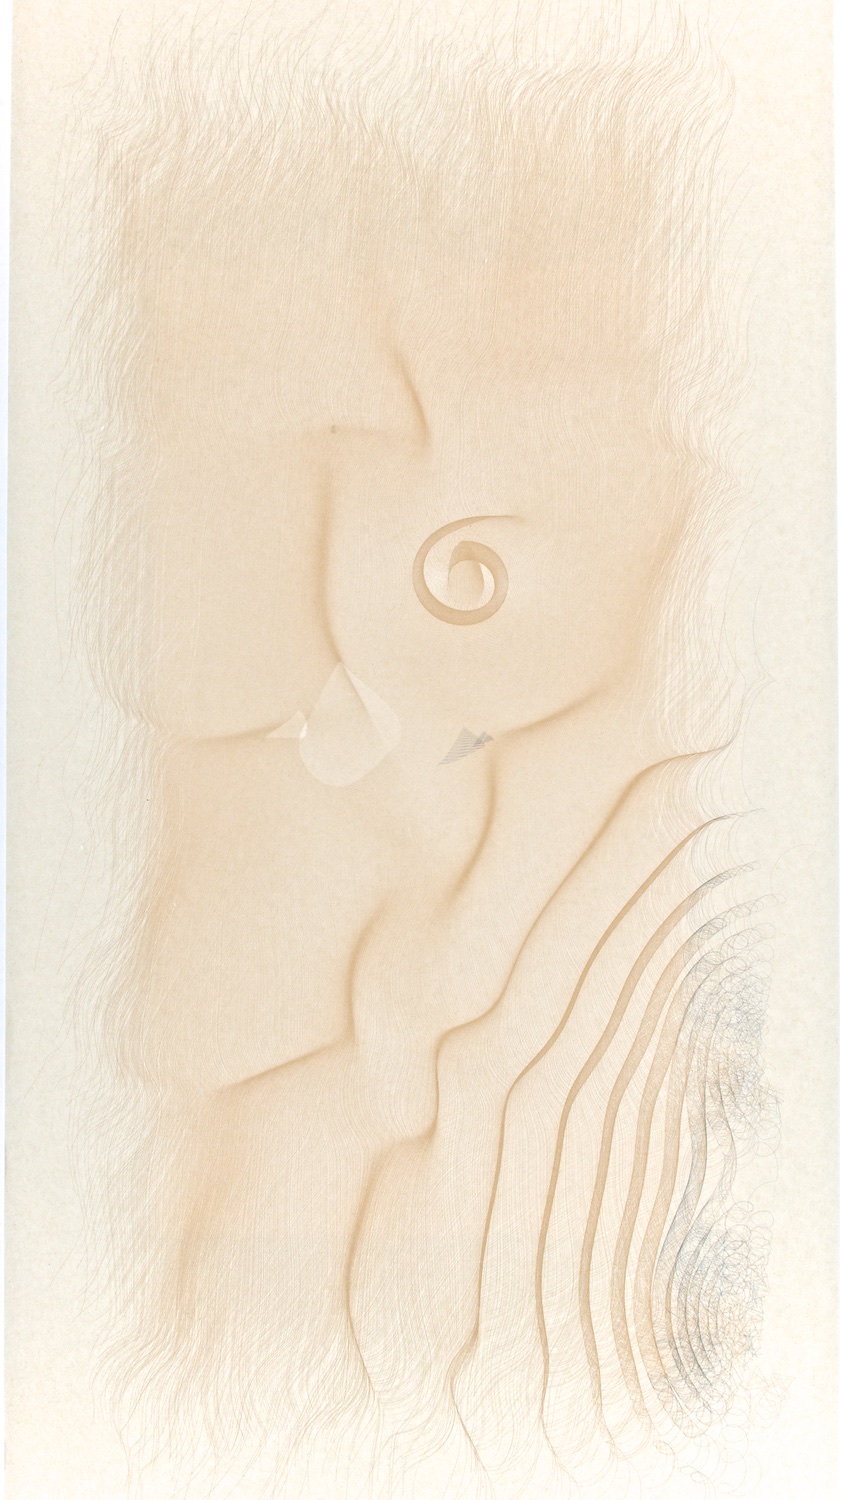   G3    Digital drawing, inkjet pigments, 2013    Art : 33.75”x16”&nbsp;    Paper: Niyodo natural,     35”x17”  